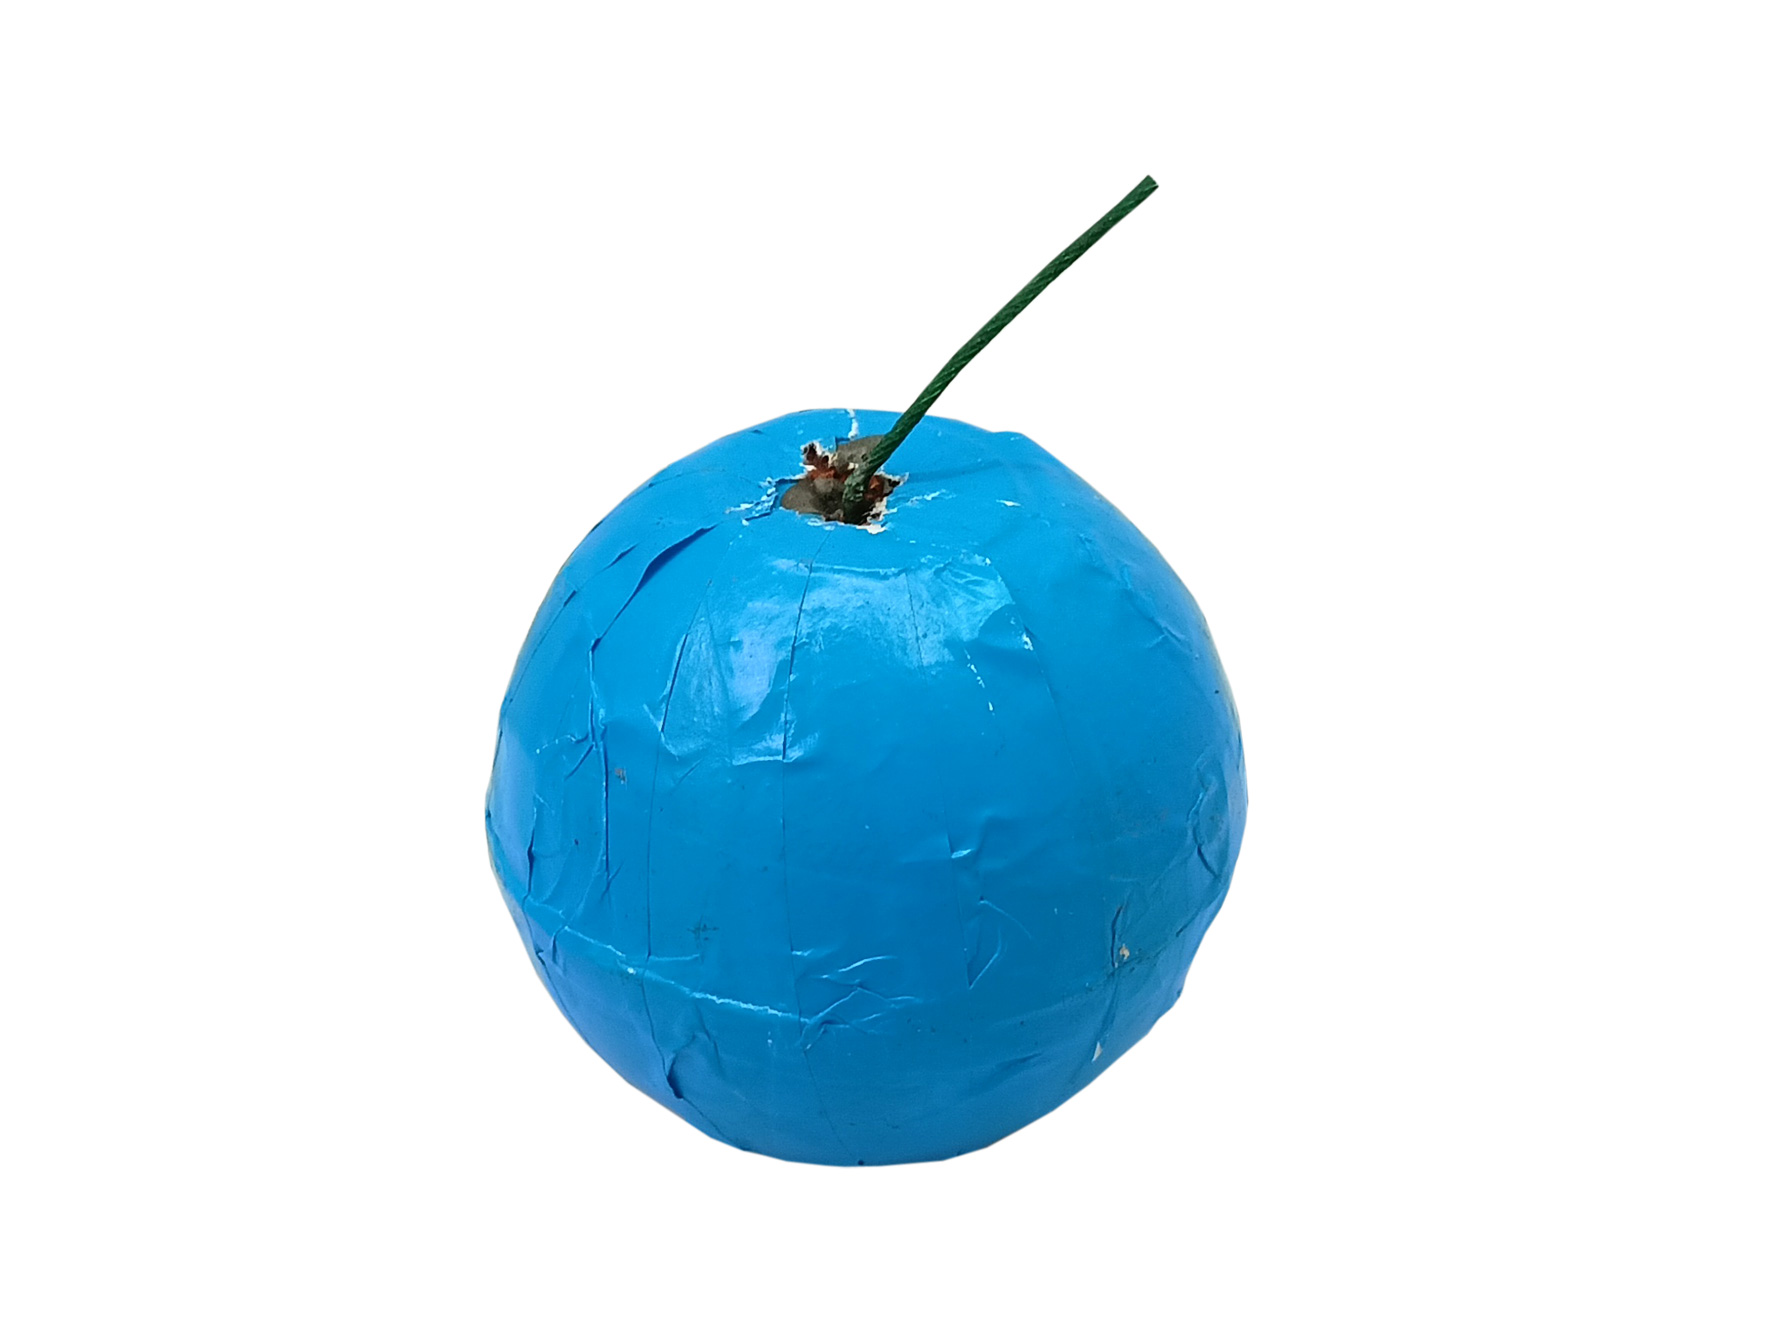 Pyrotechnika Dýmovnice Neon Smoke Ball modrá 1ks